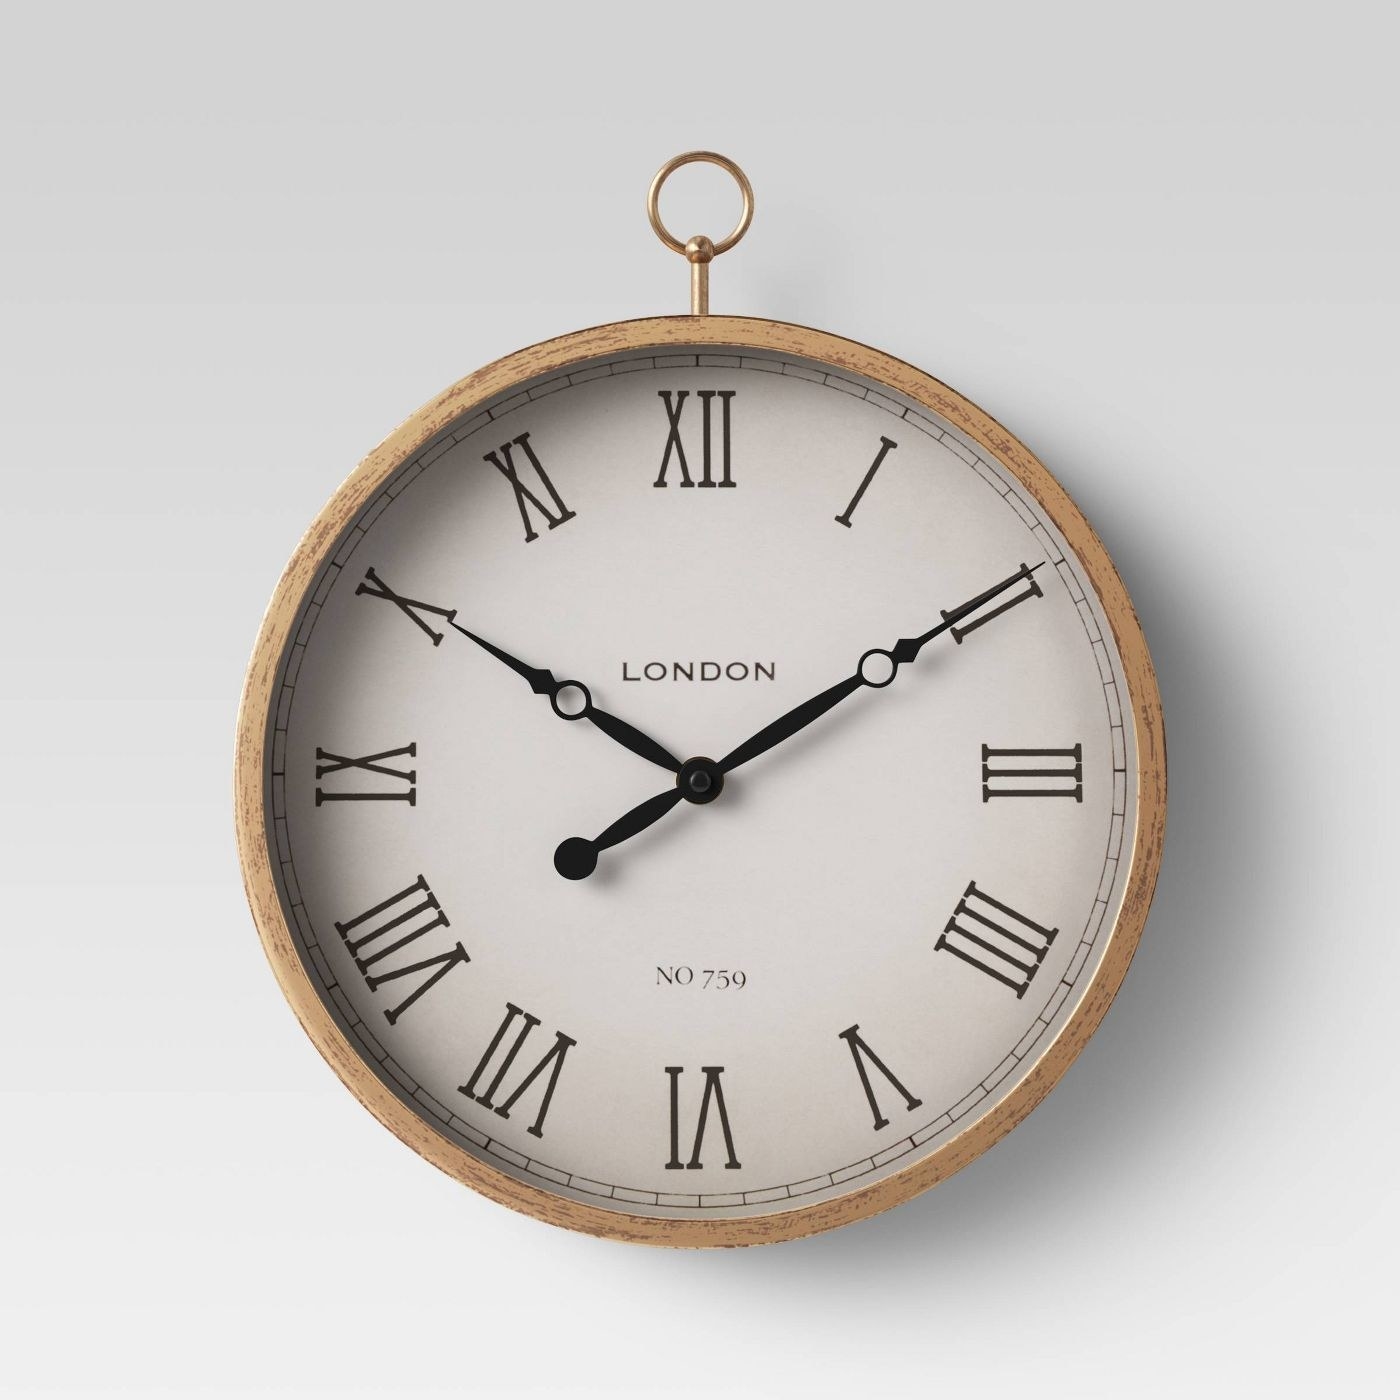 The thin brass pocket watch wall clock